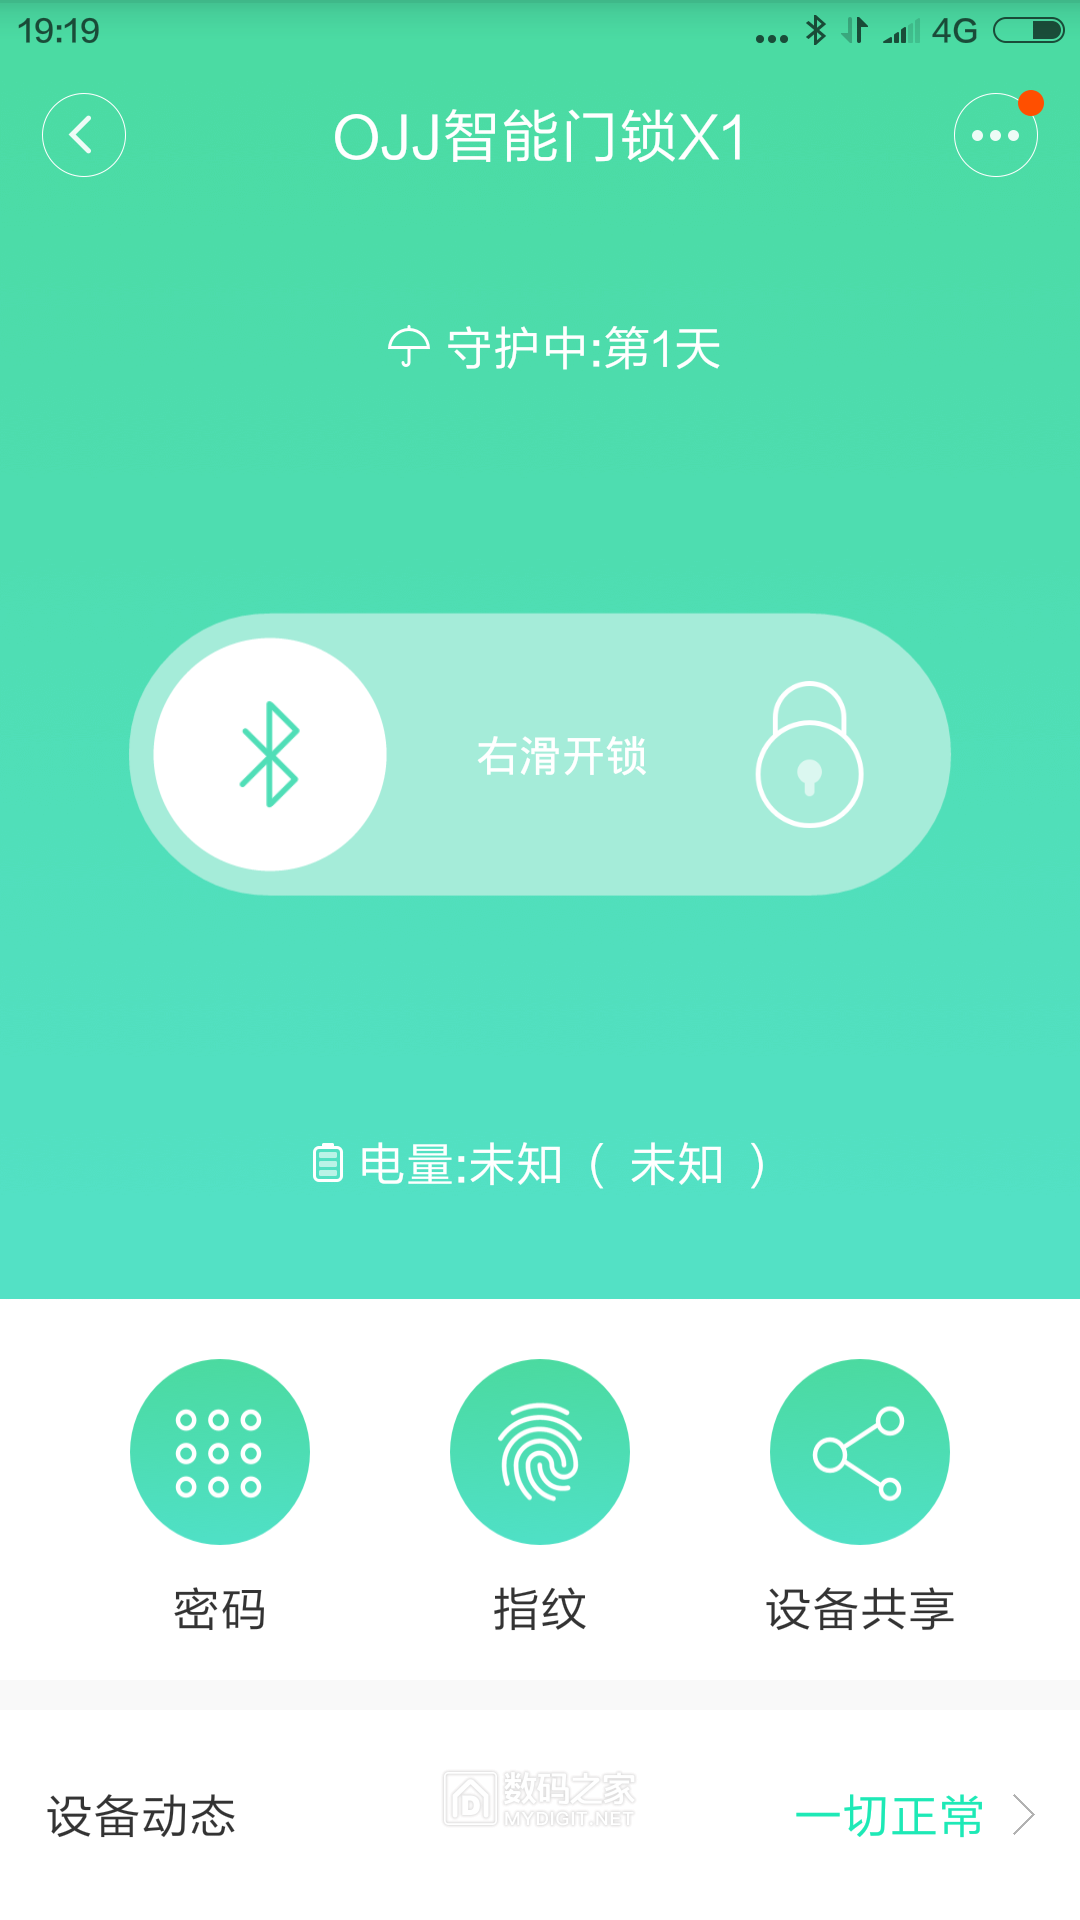 Screenshot_2019-01-28-19-19-48_com.xiaomi.smartho.png